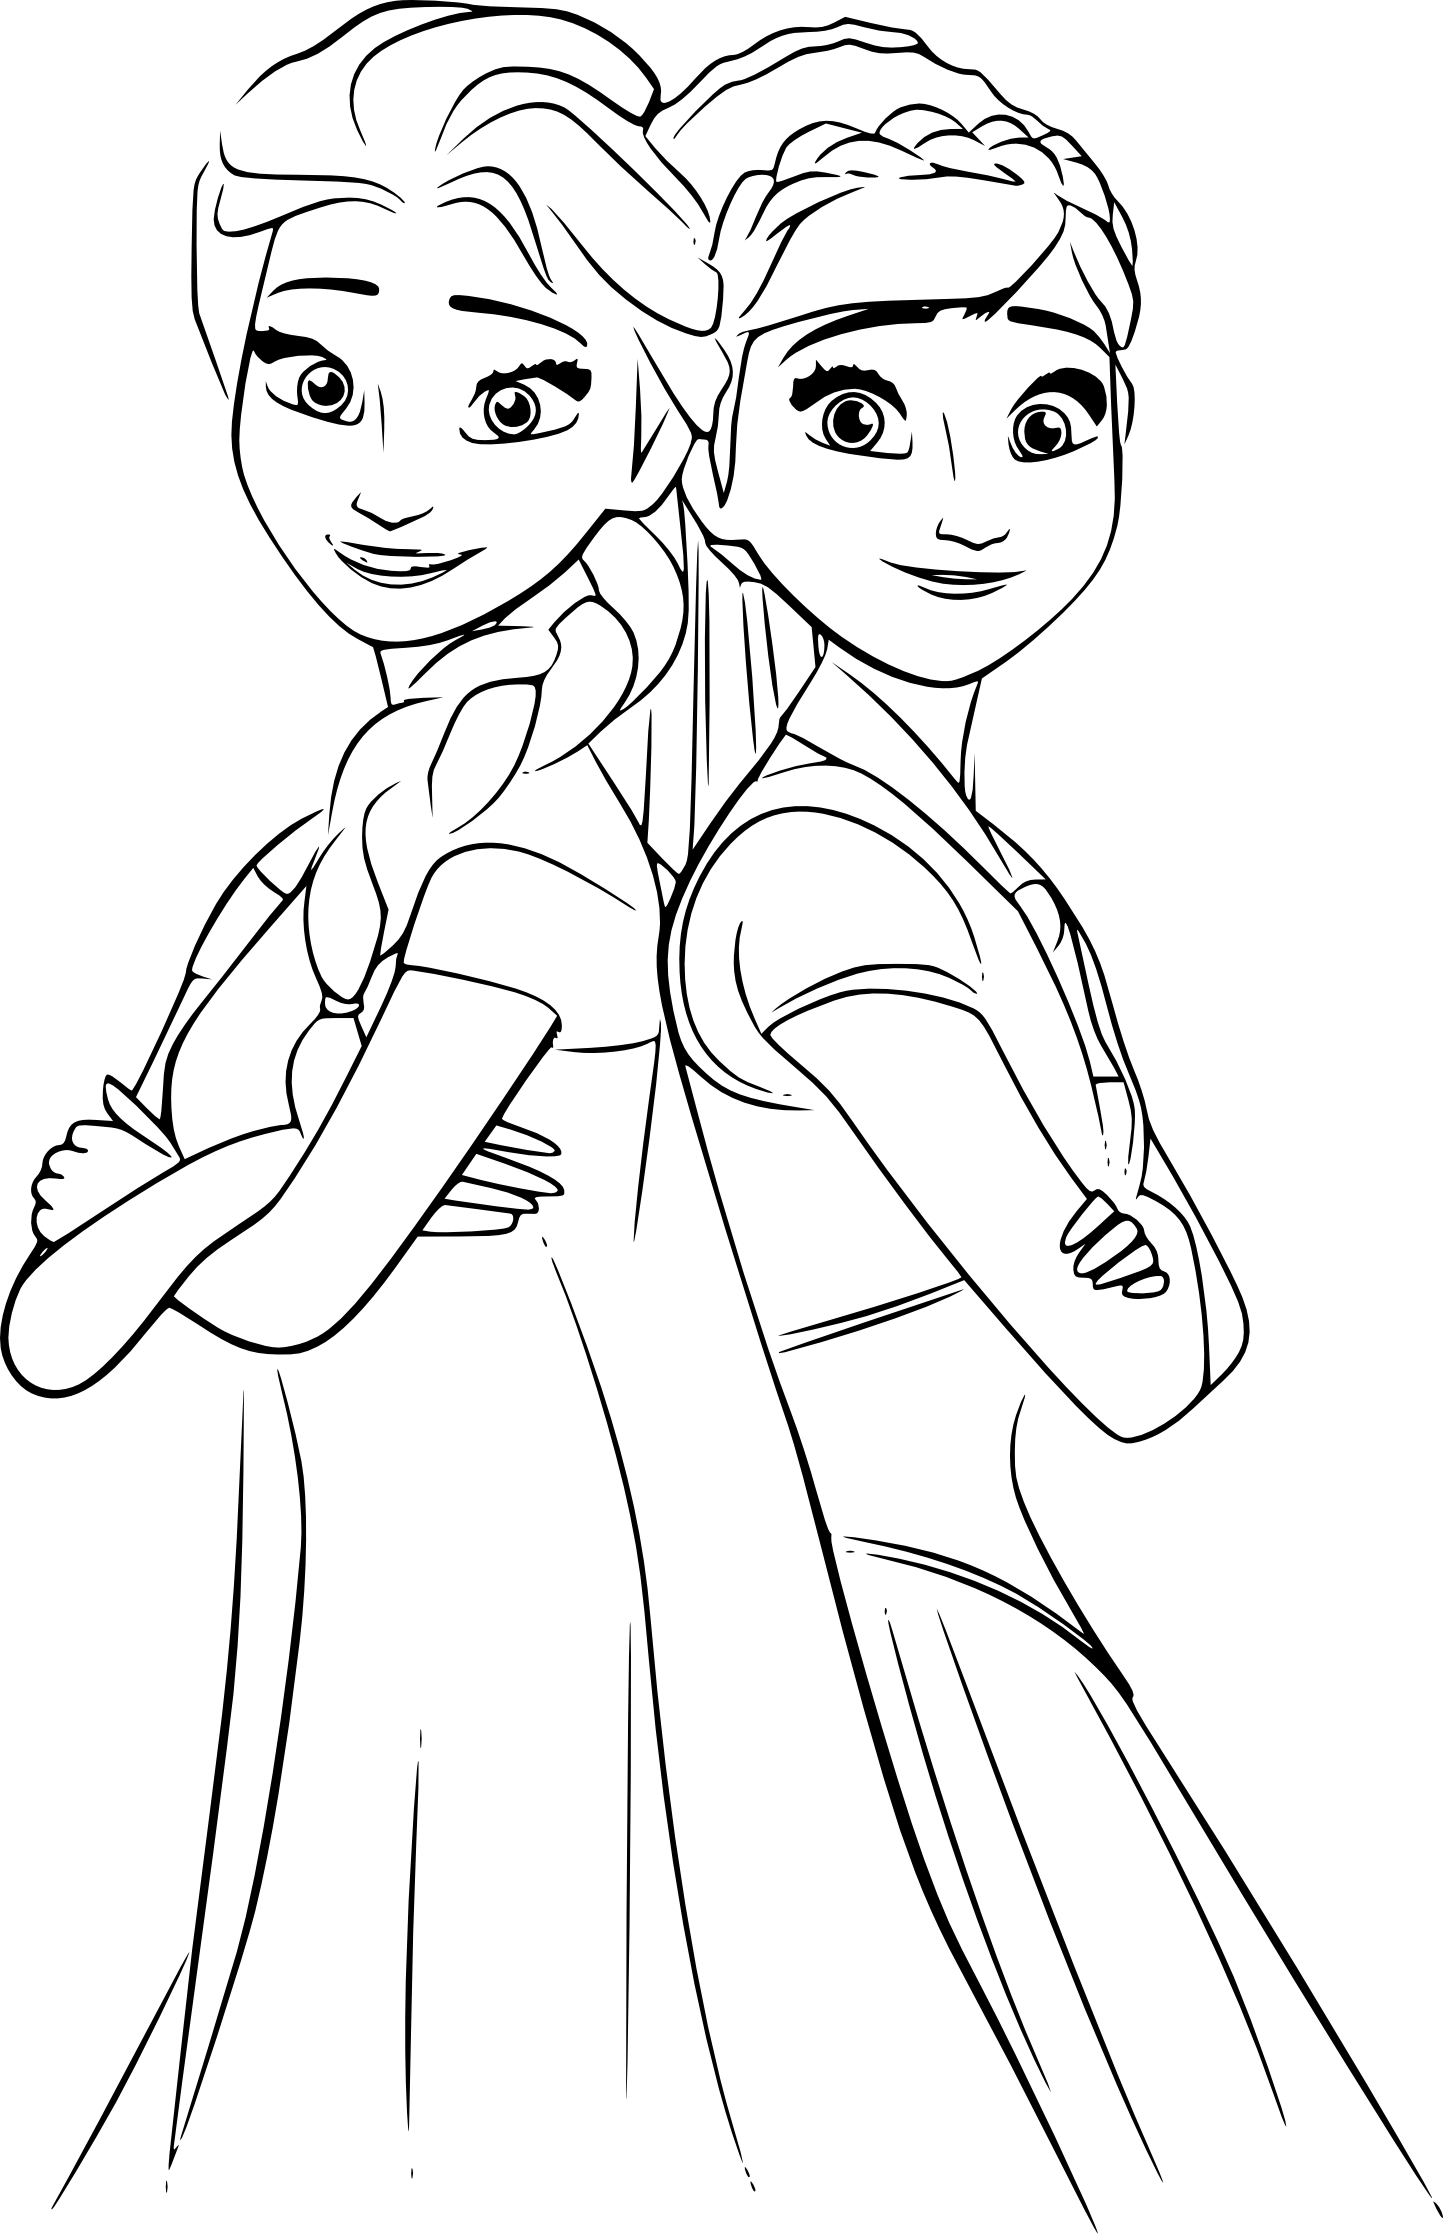 Elsa et Anna dessin